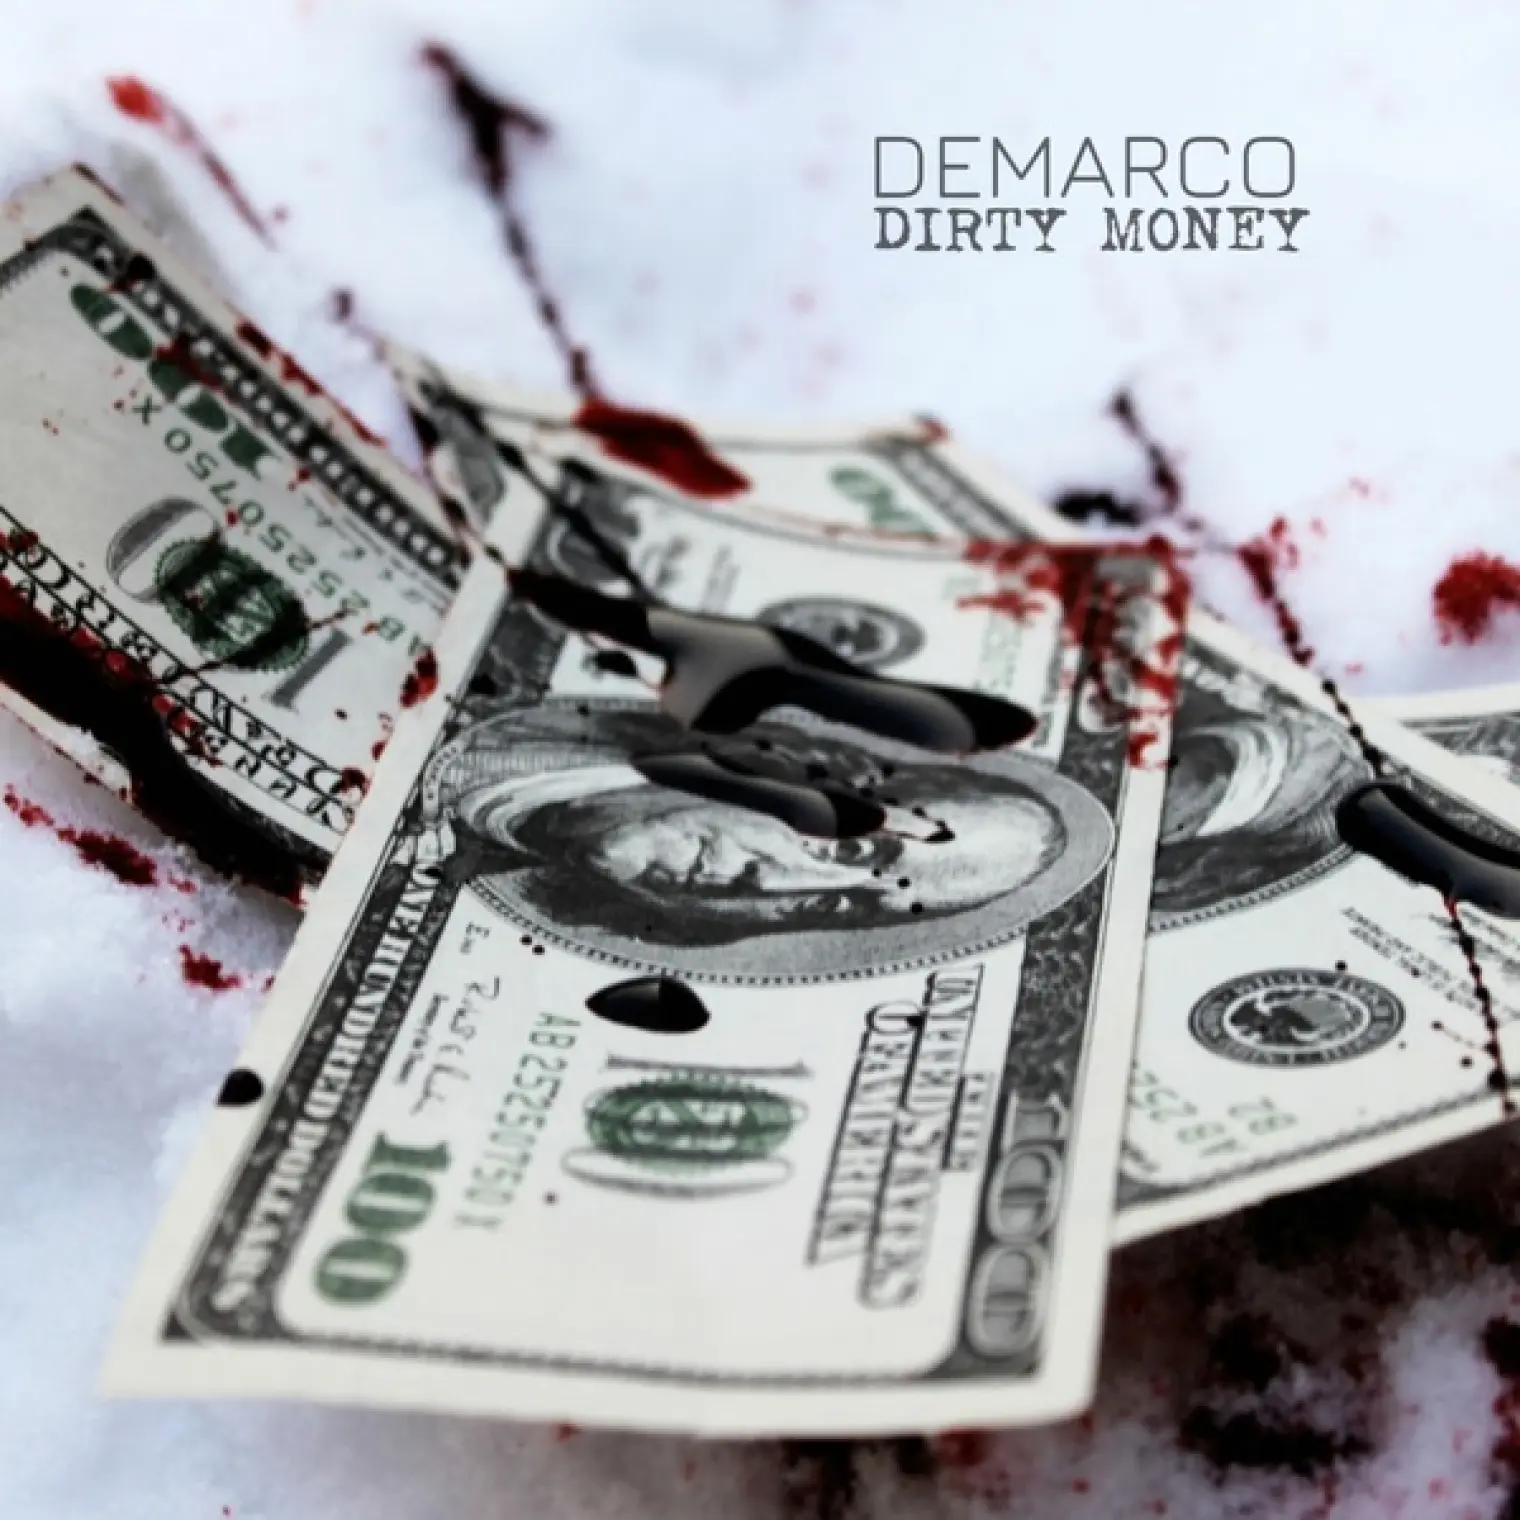 Dirty Money -  Demarco 